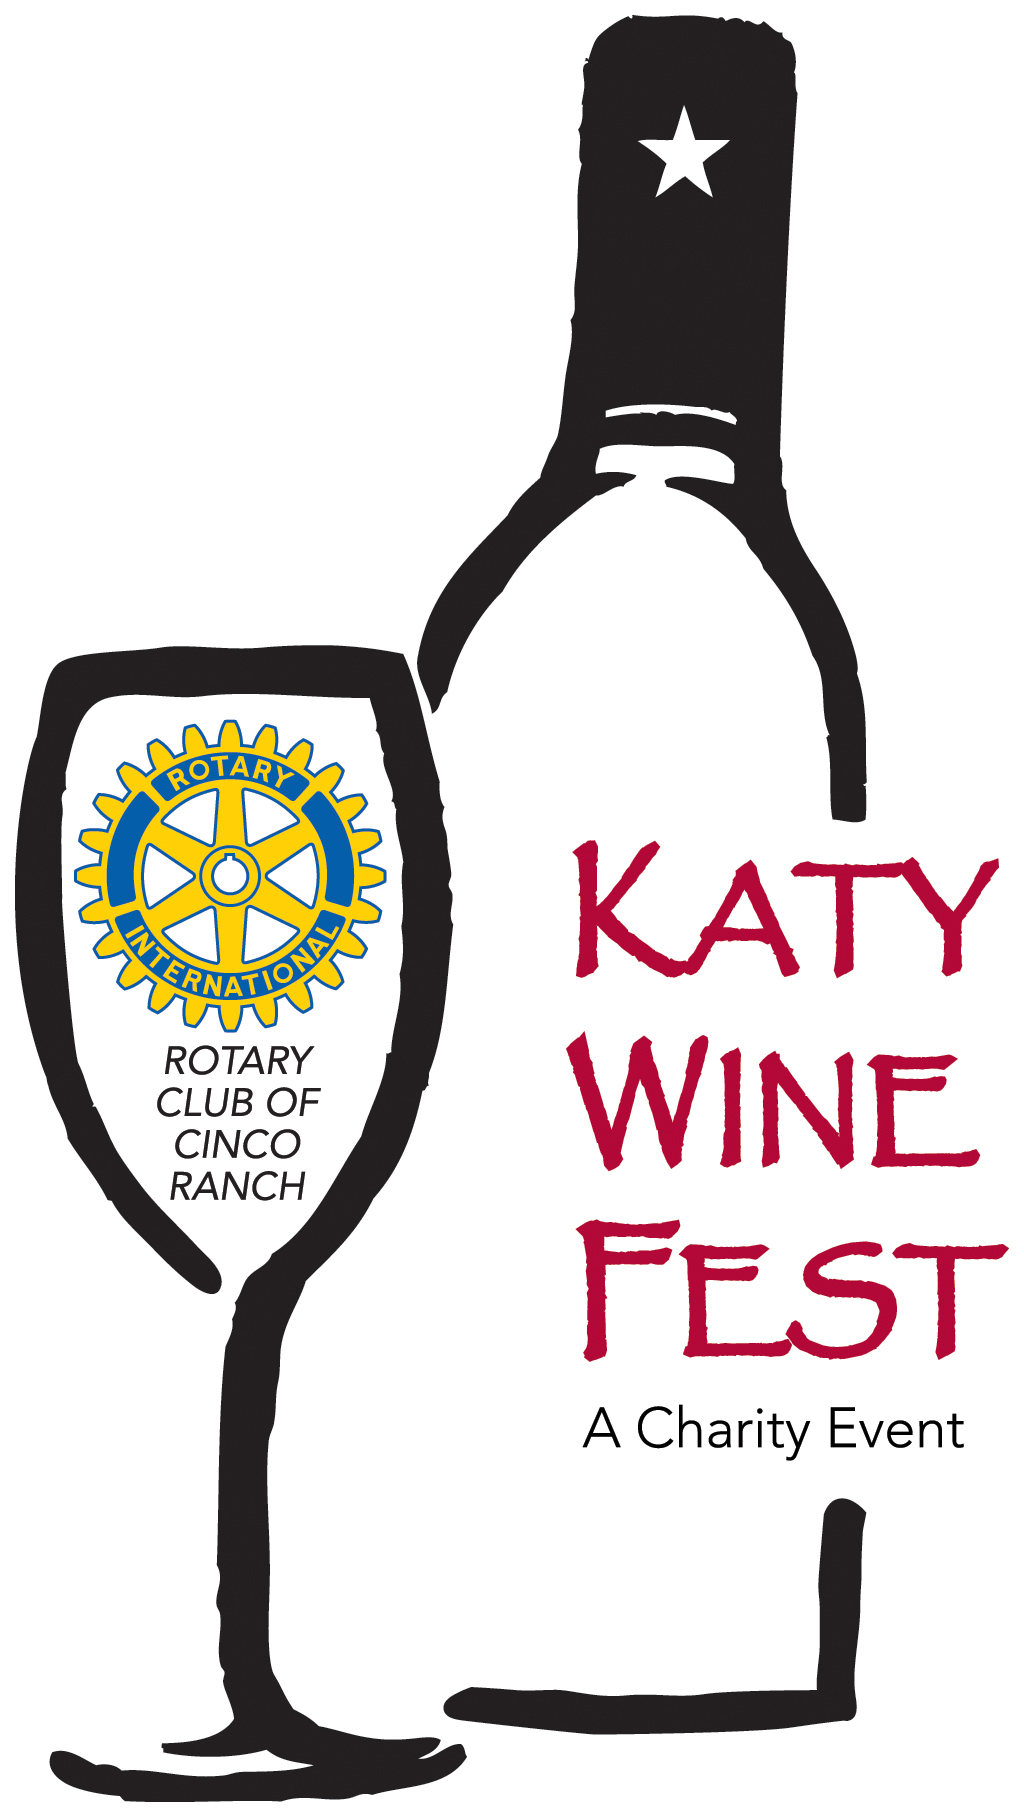 2014 Katy Wine Fest